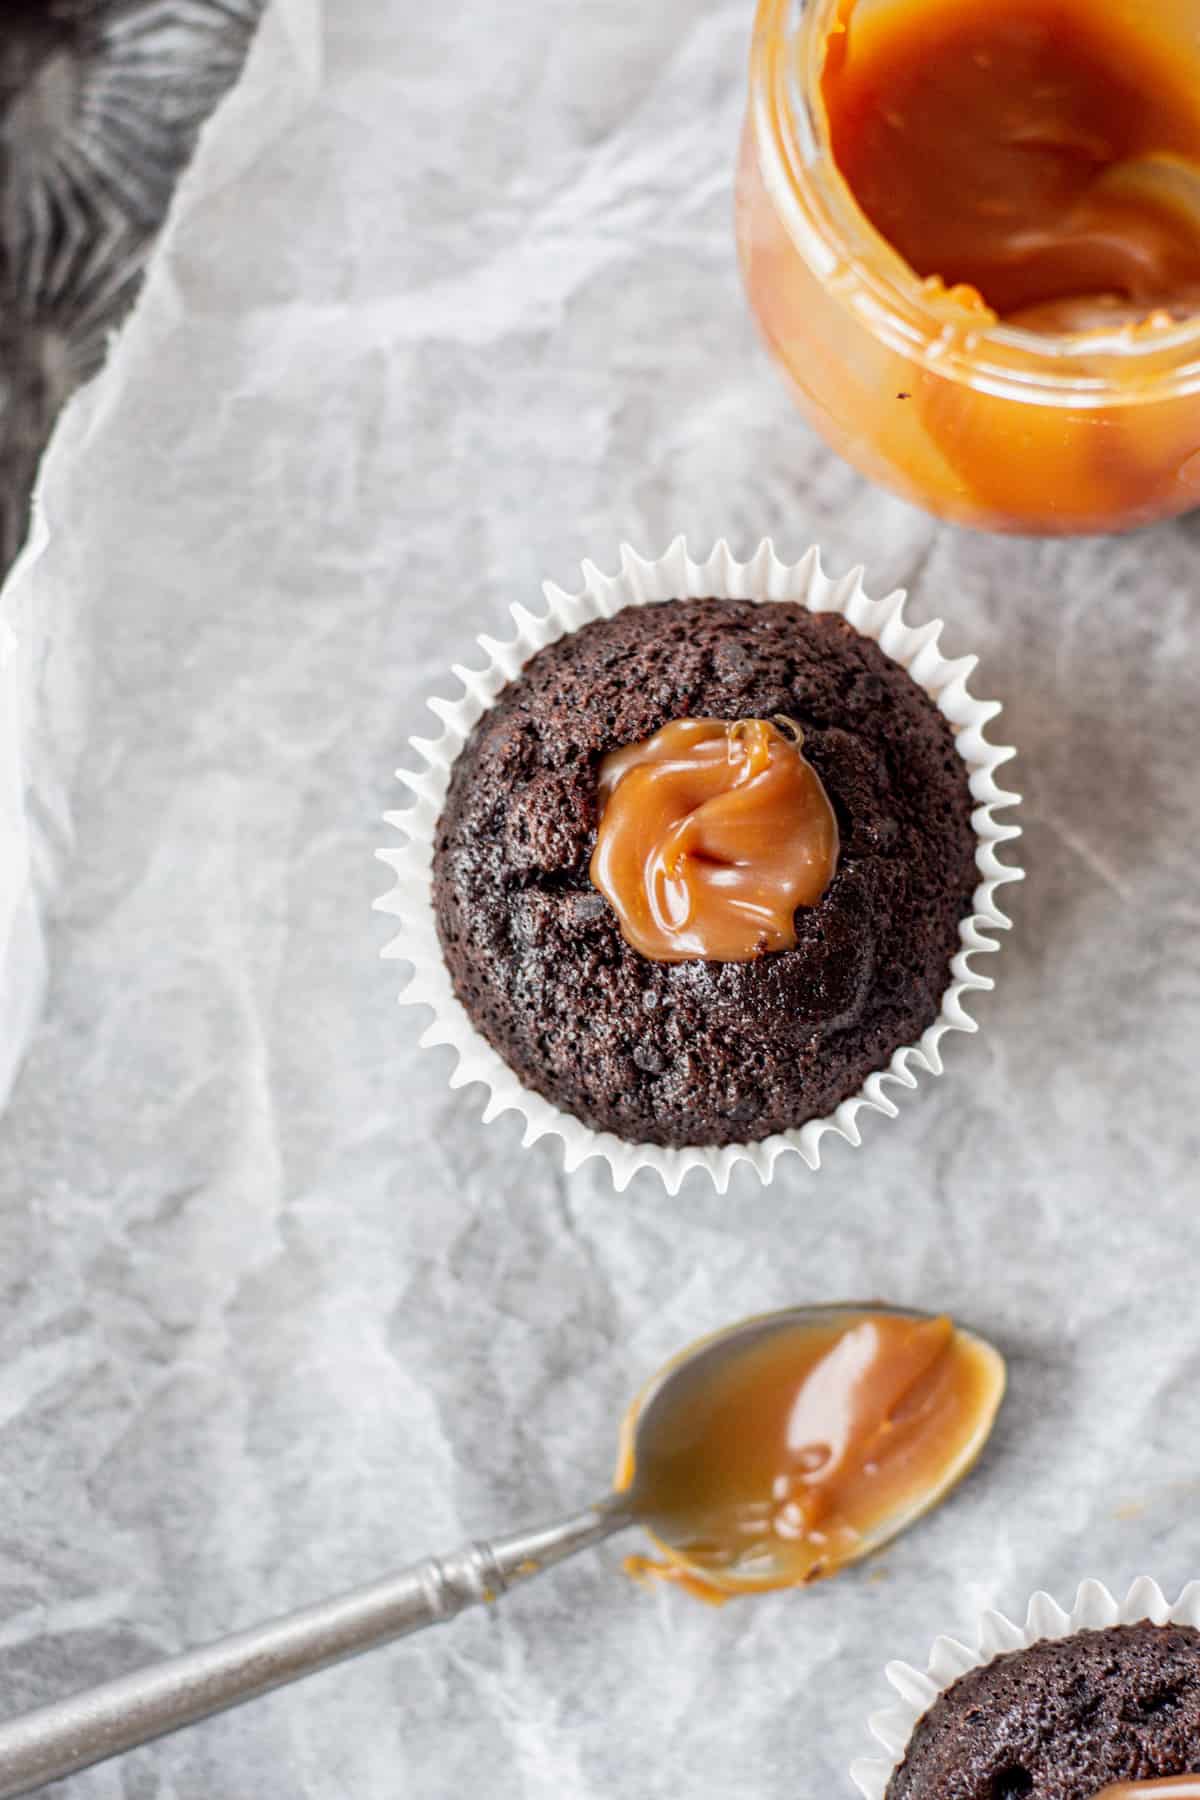 caramel inside a chocolate cupcake.